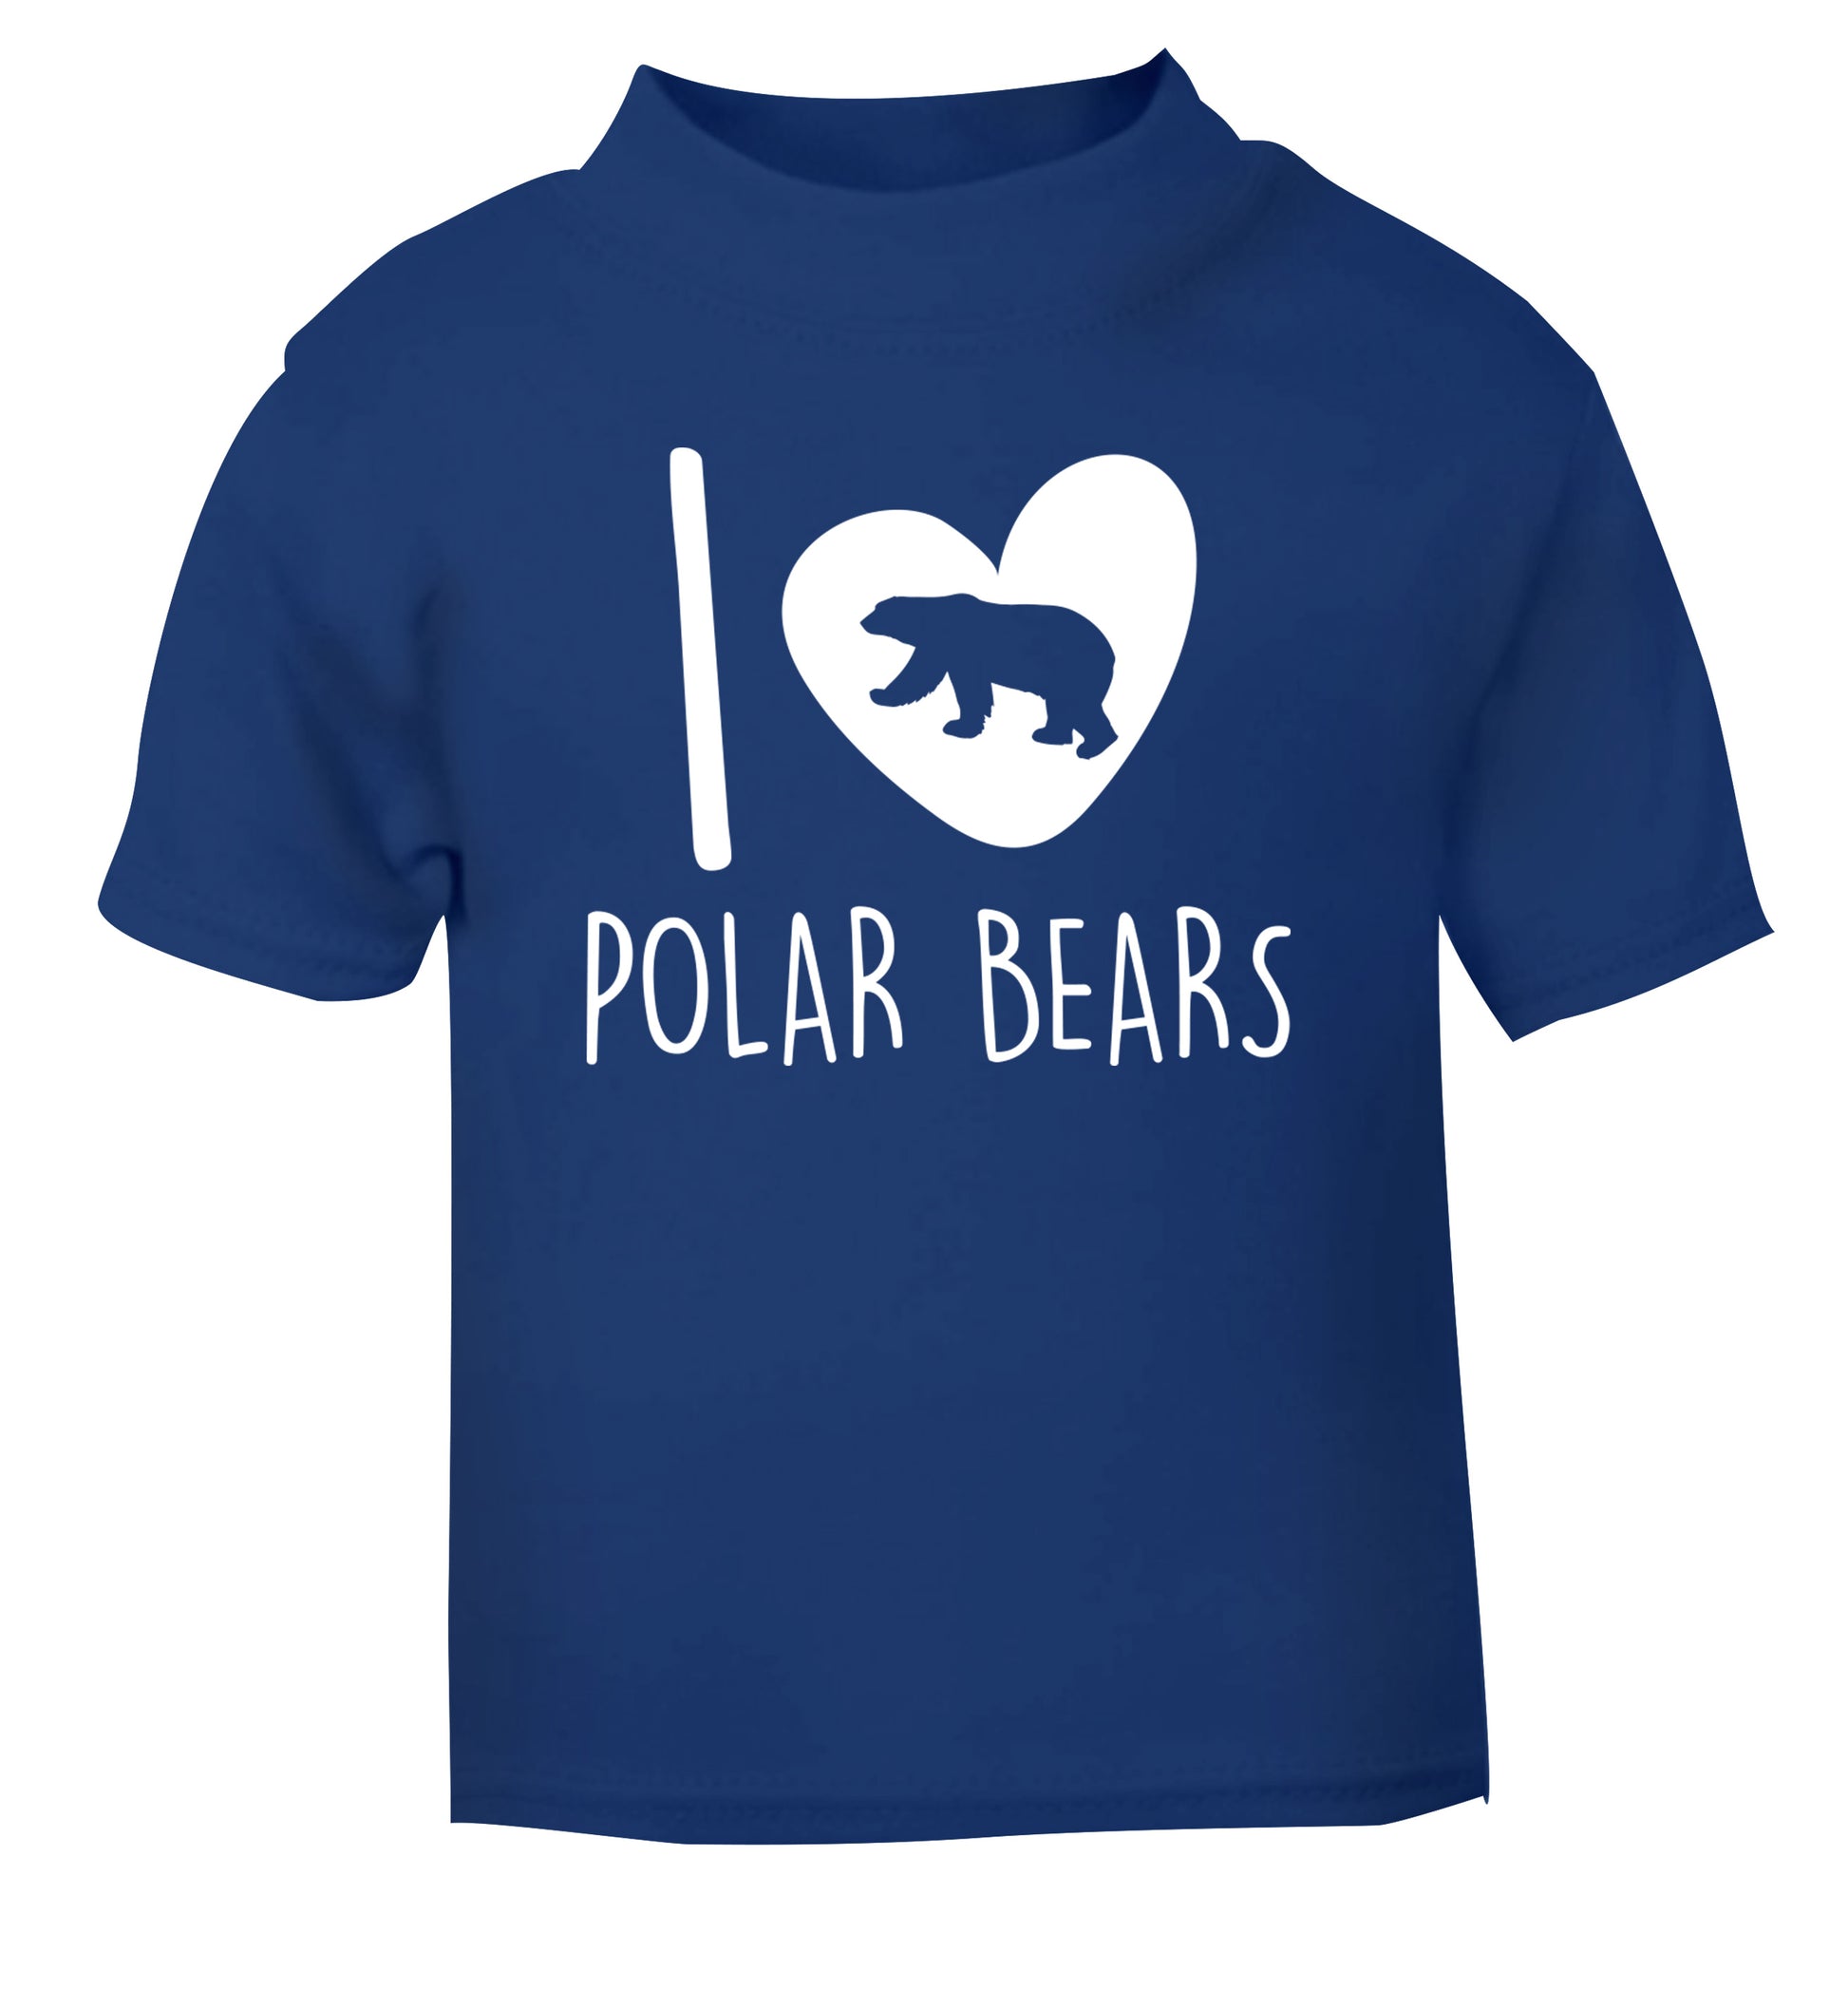 I Love Polar Bears blue Baby Toddler Tshirt 2 Years